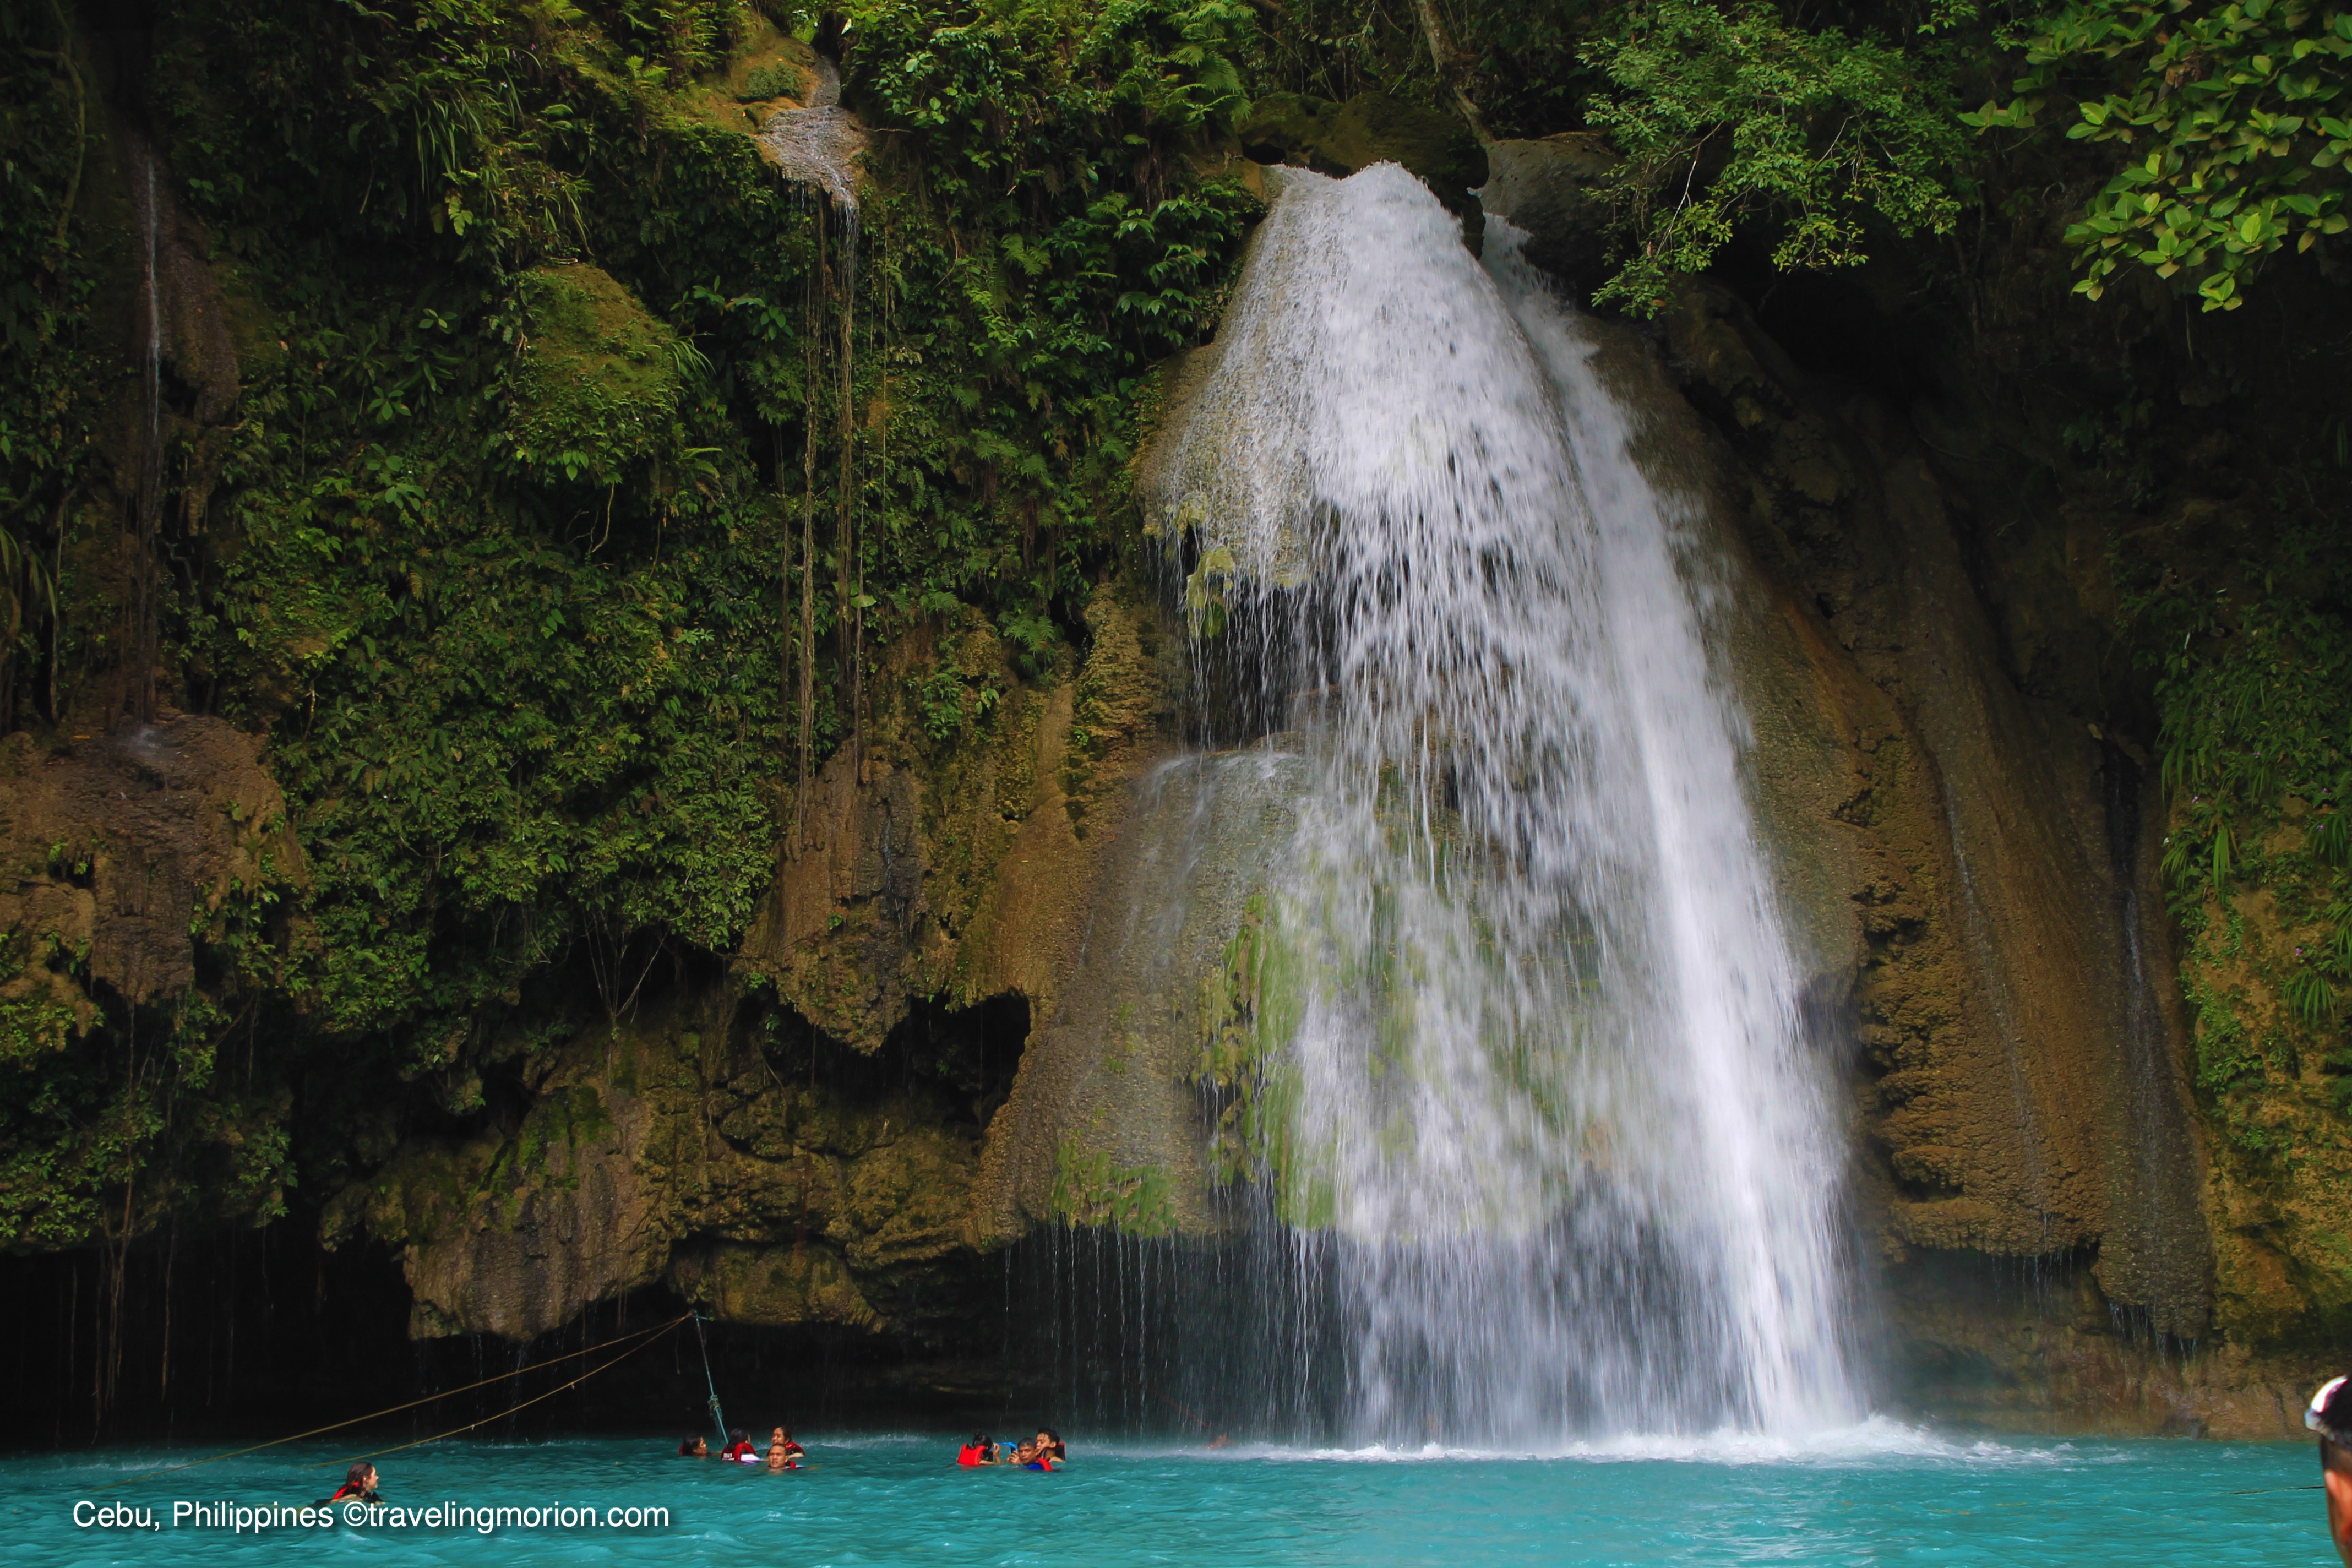 Kawasan Falls in Badian, Cebu